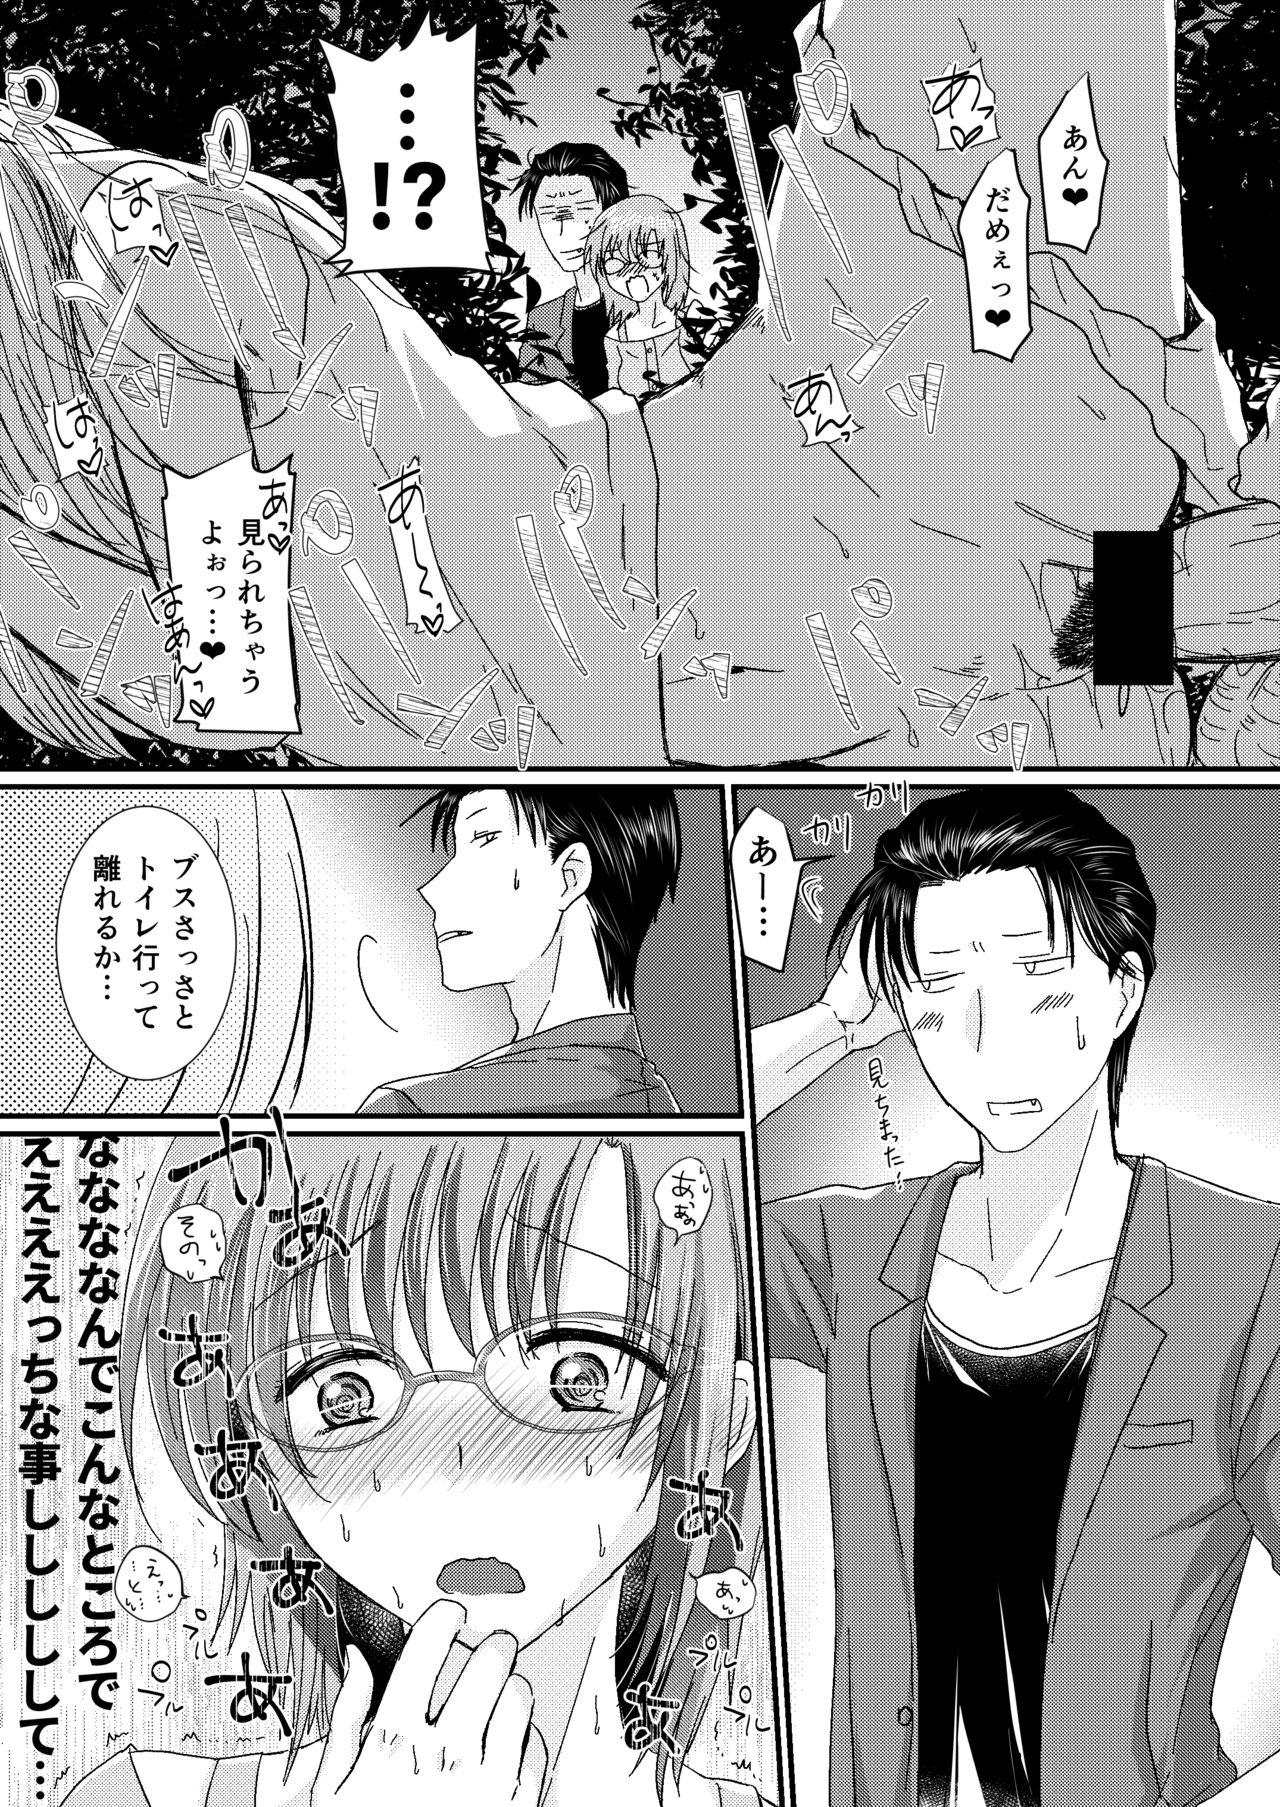 Seijin Muke Manga 16p 2